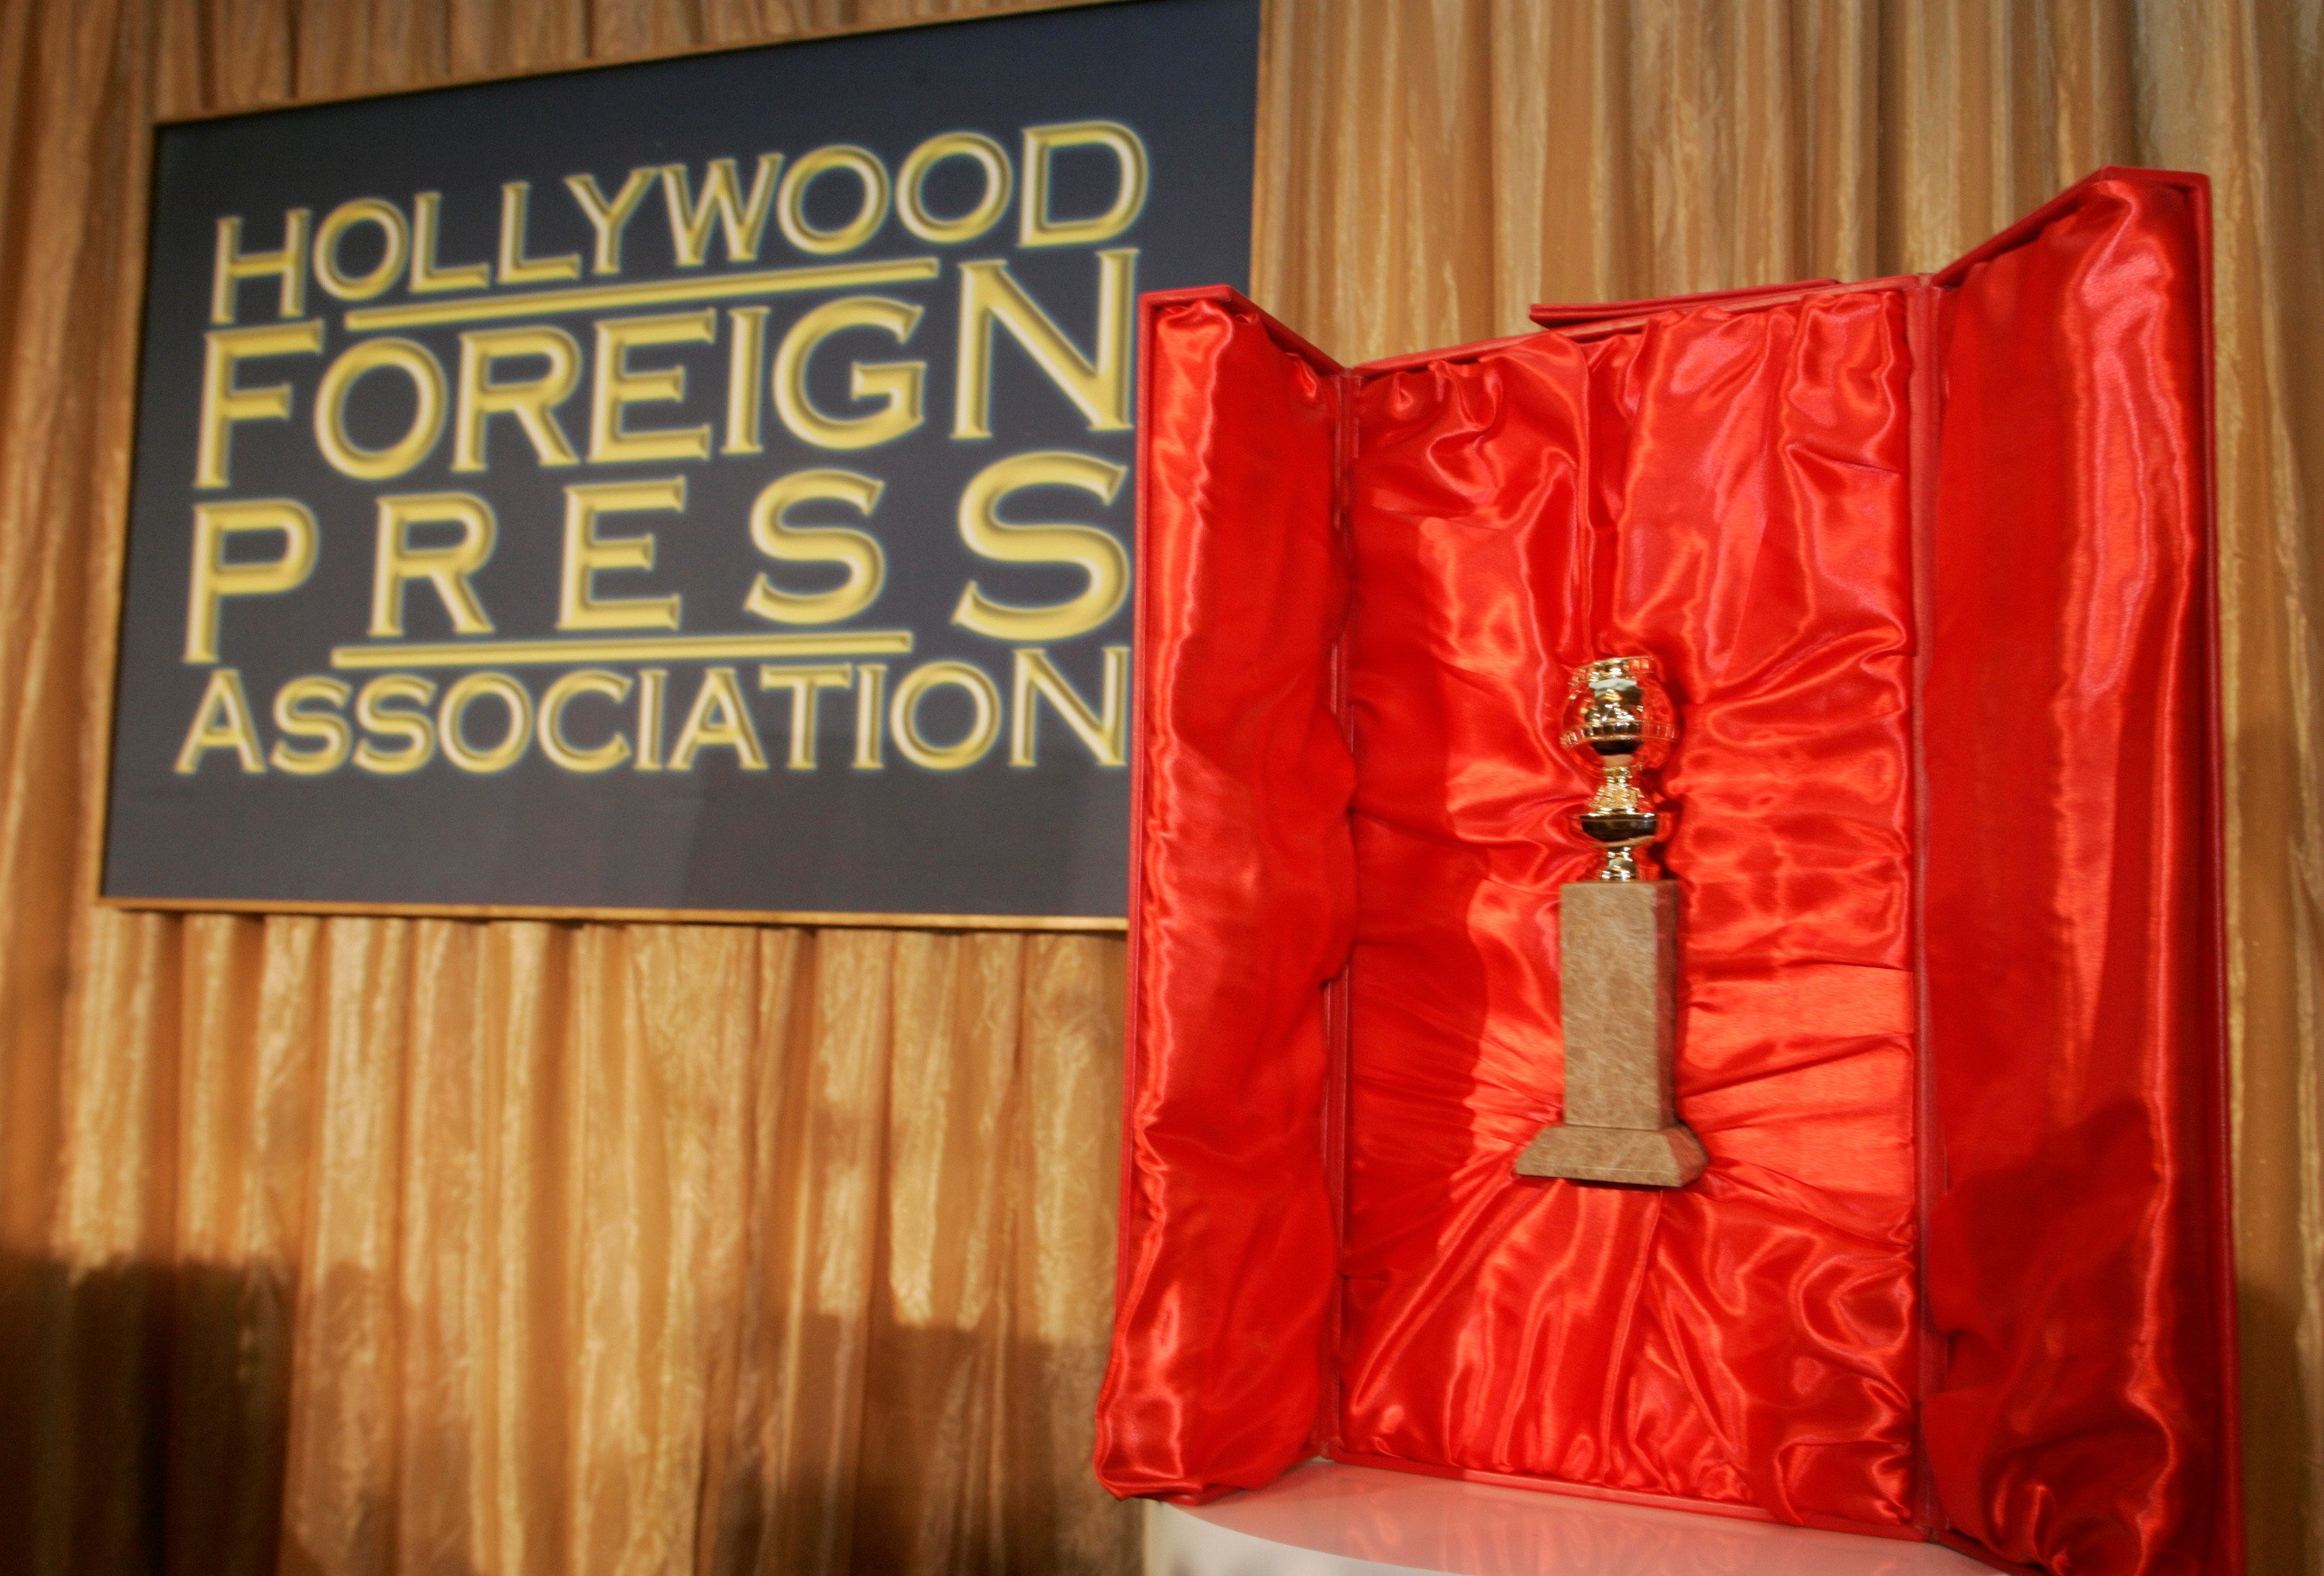 Golden Globes proposes changes to address diversity, ethics complaints